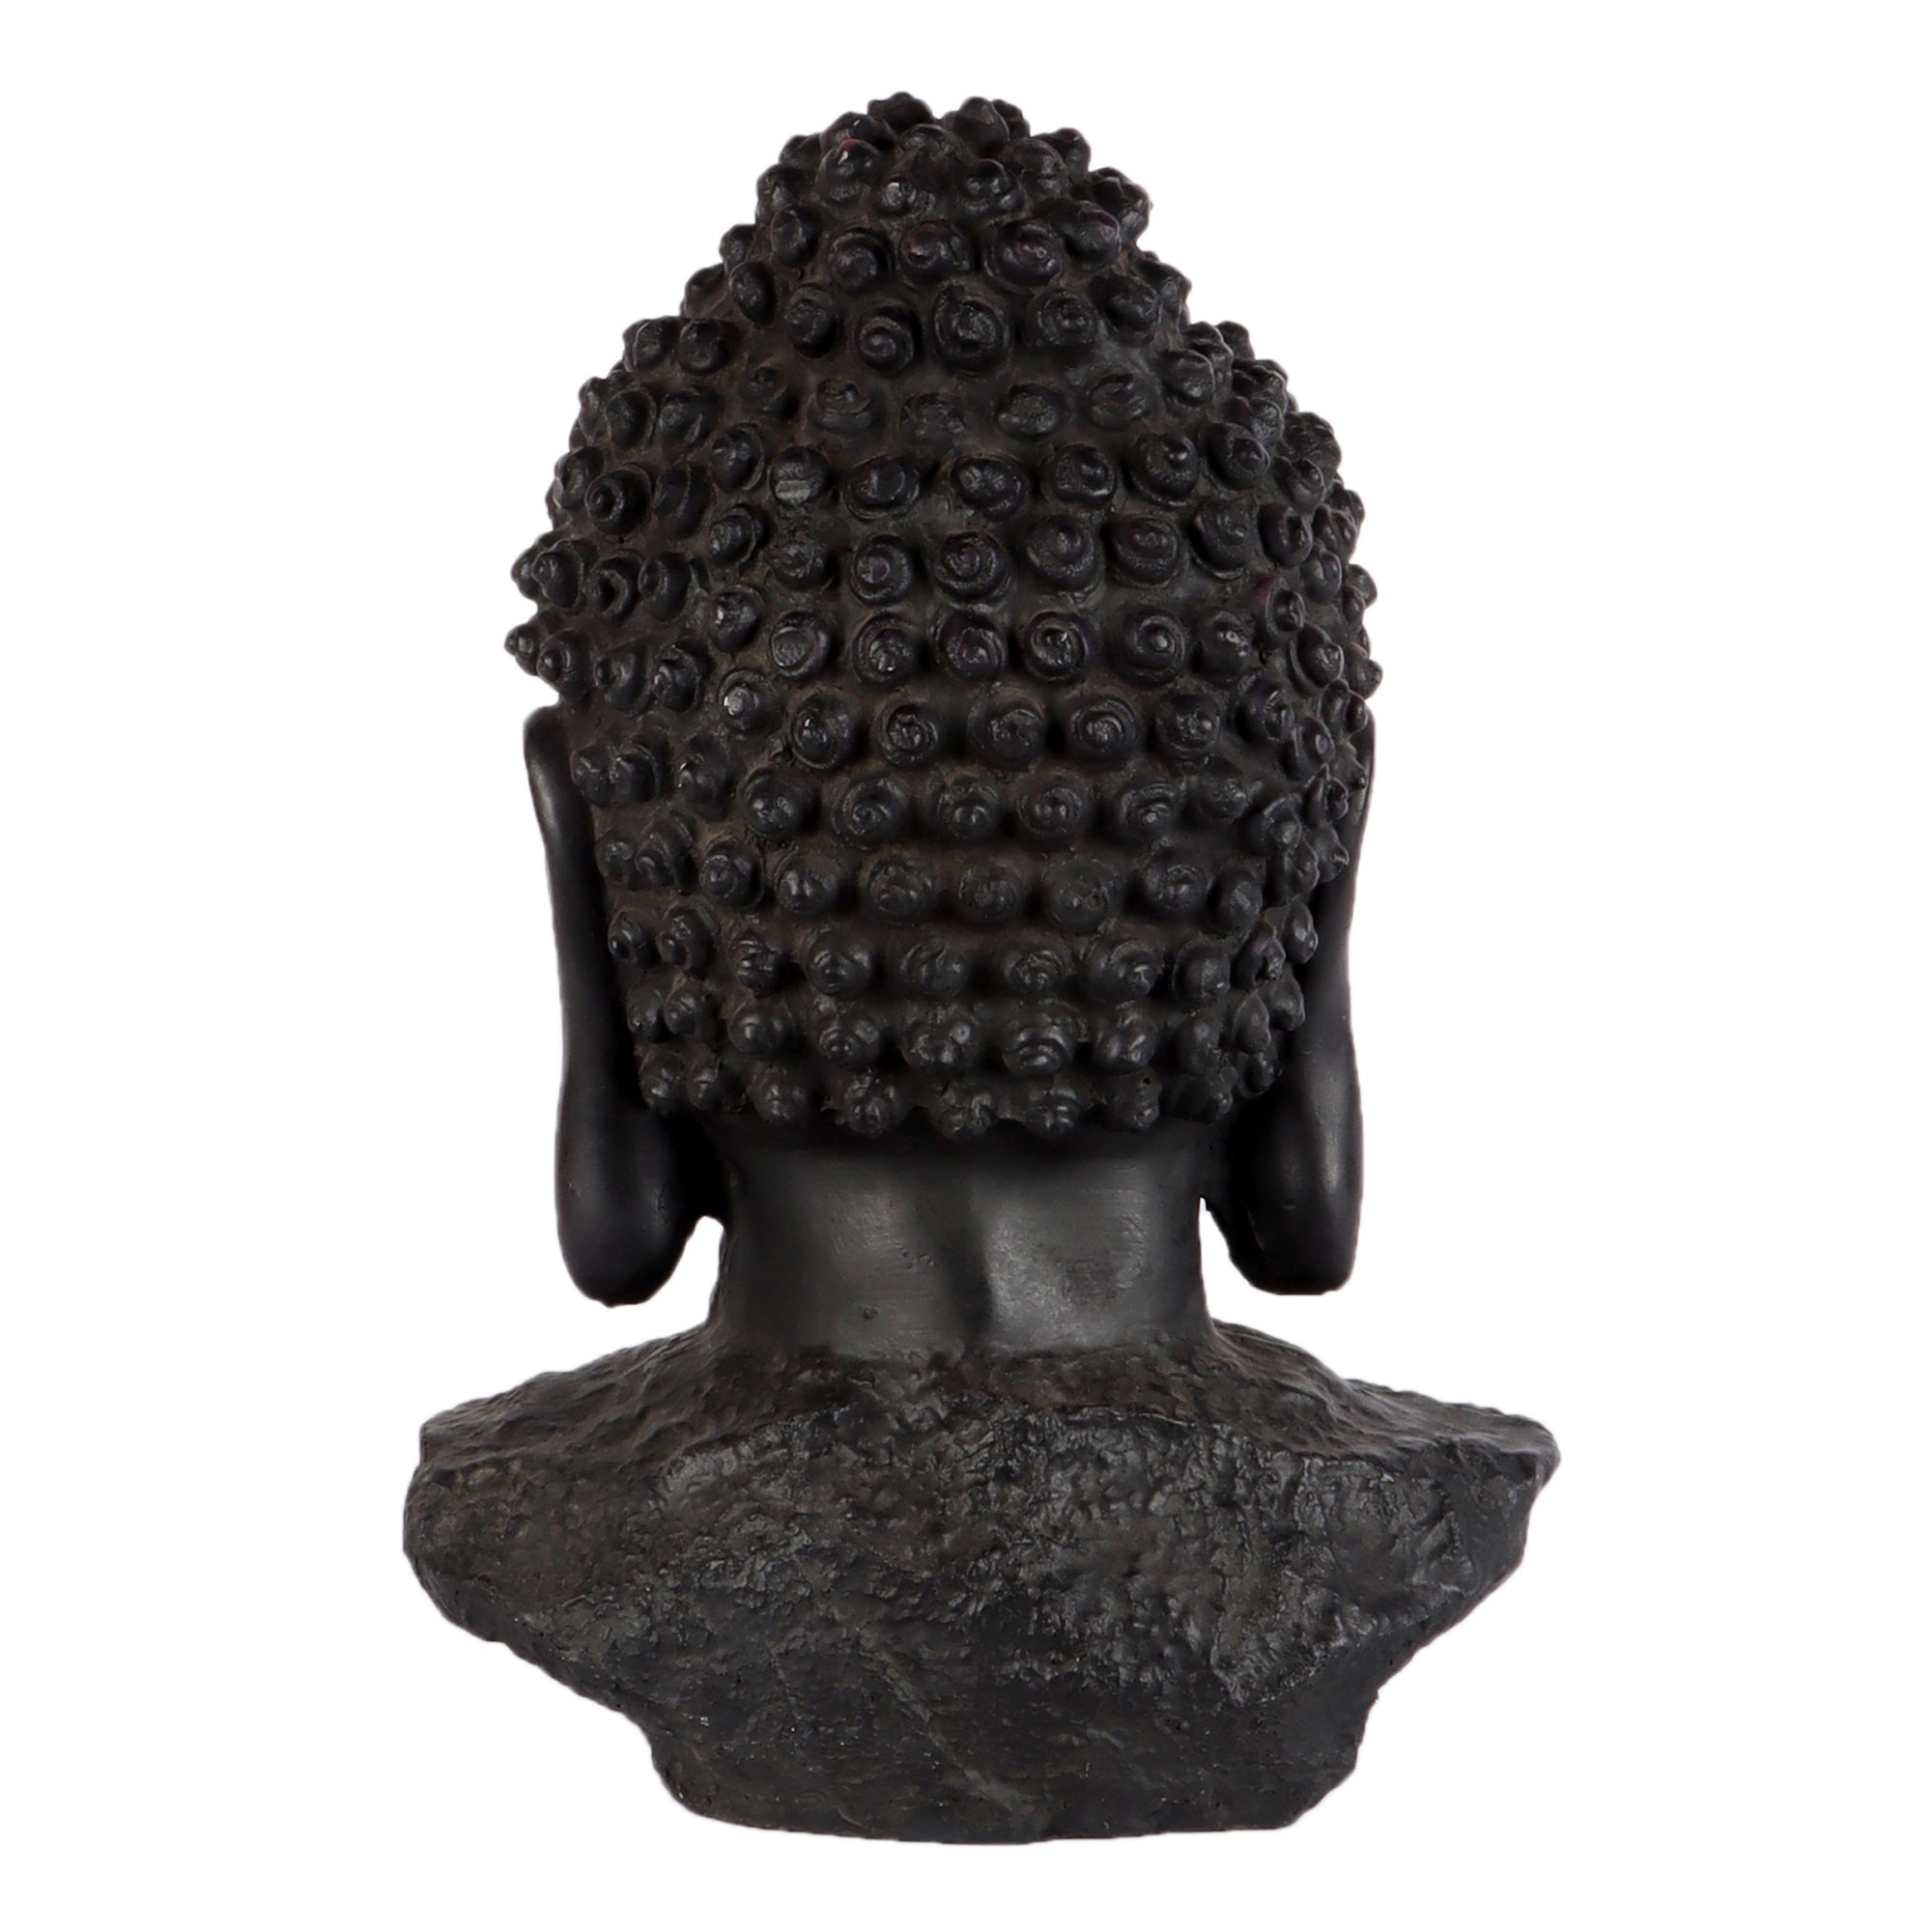 The Buddha Face (Large)